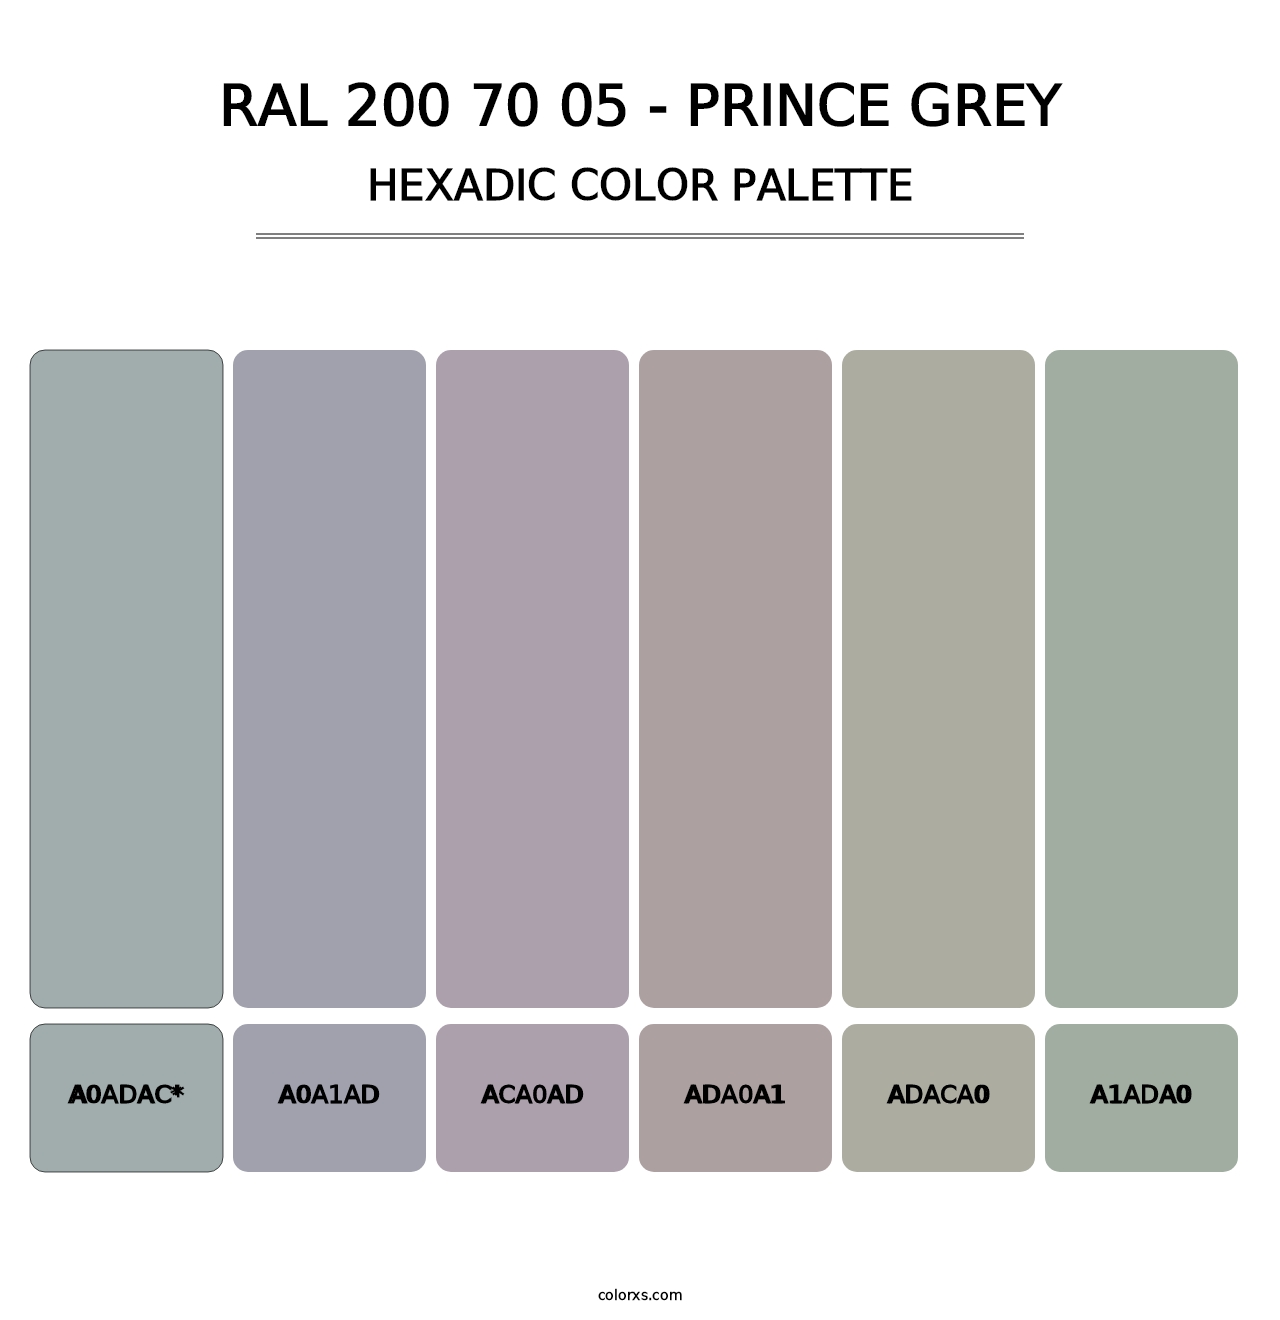 RAL 200 70 05 - Prince Grey - Hexadic Color Palette